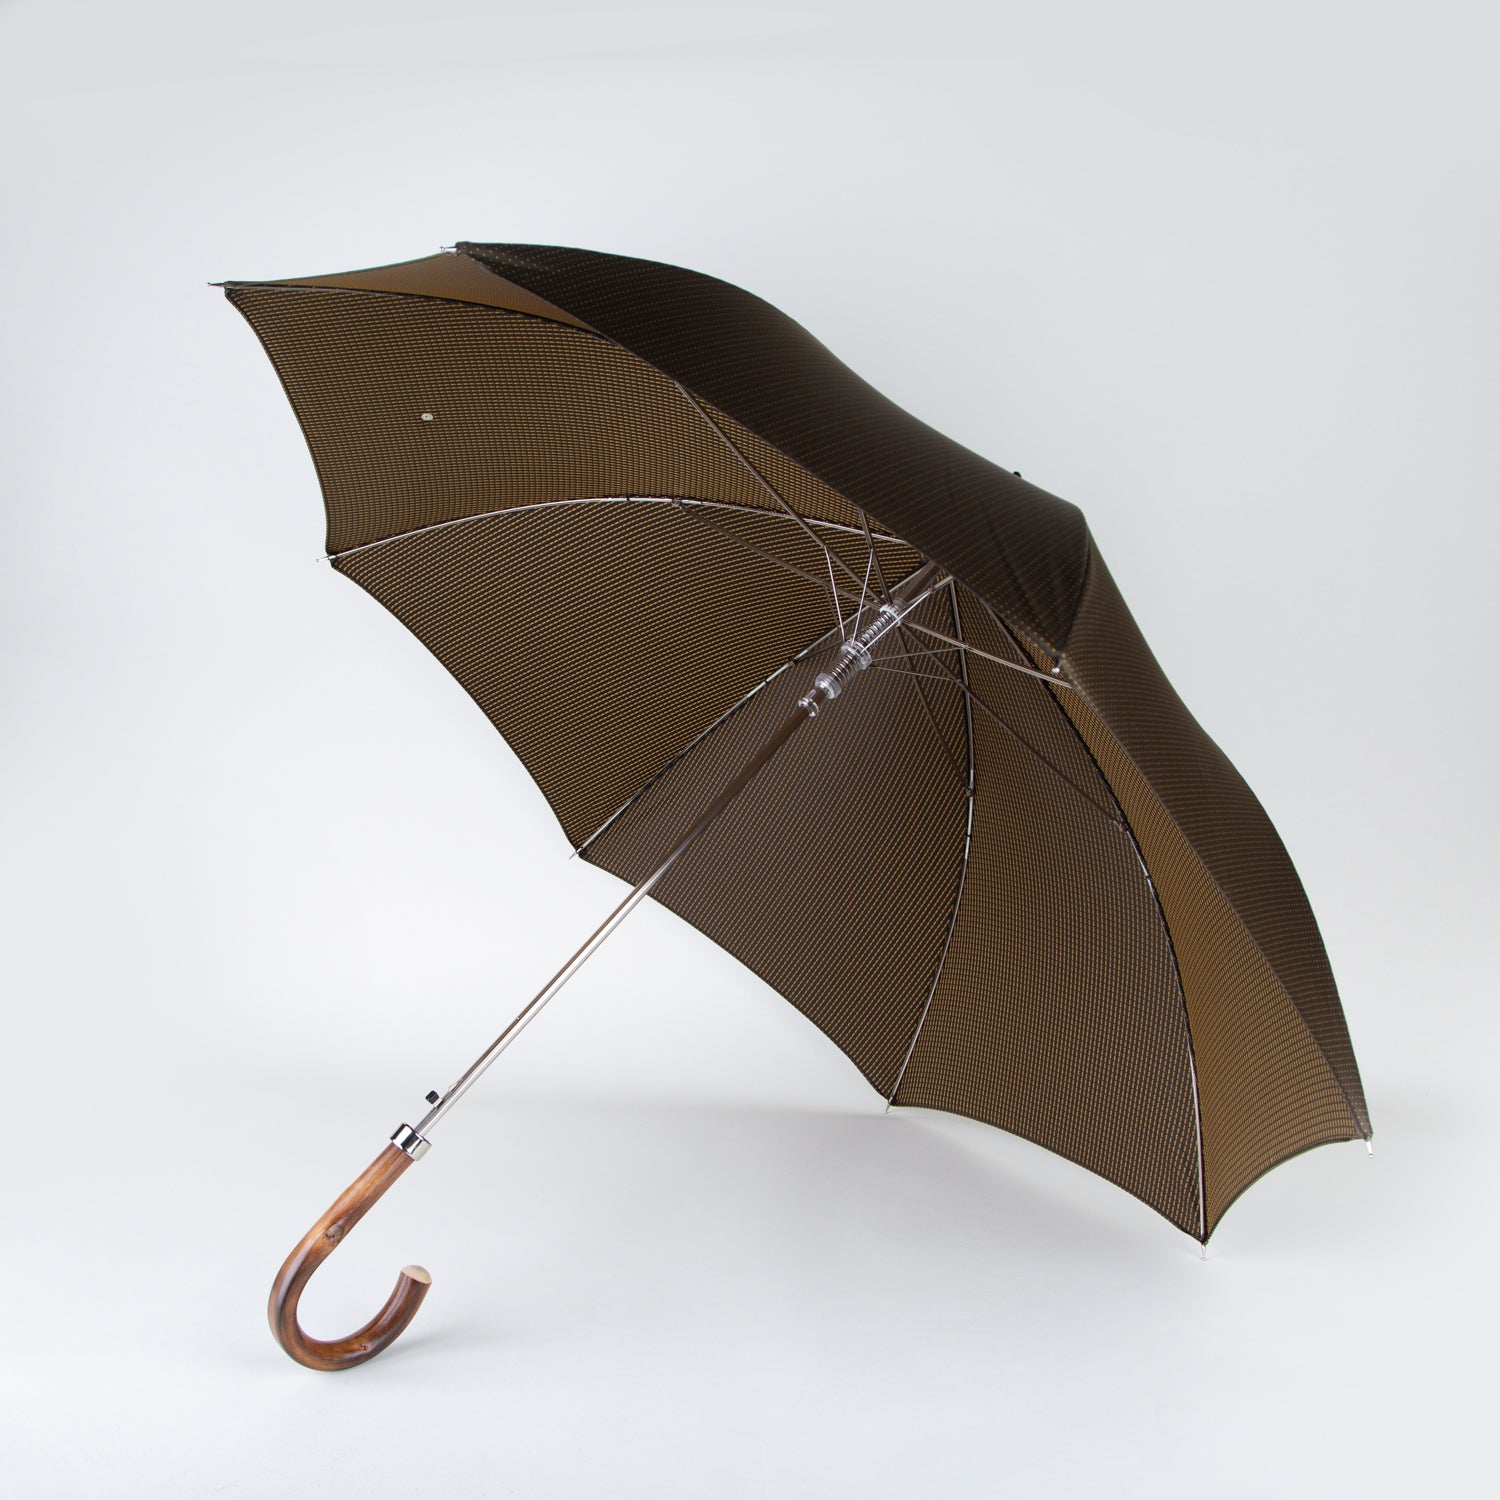 Gent's Bespoke Umbrella - Secret Location